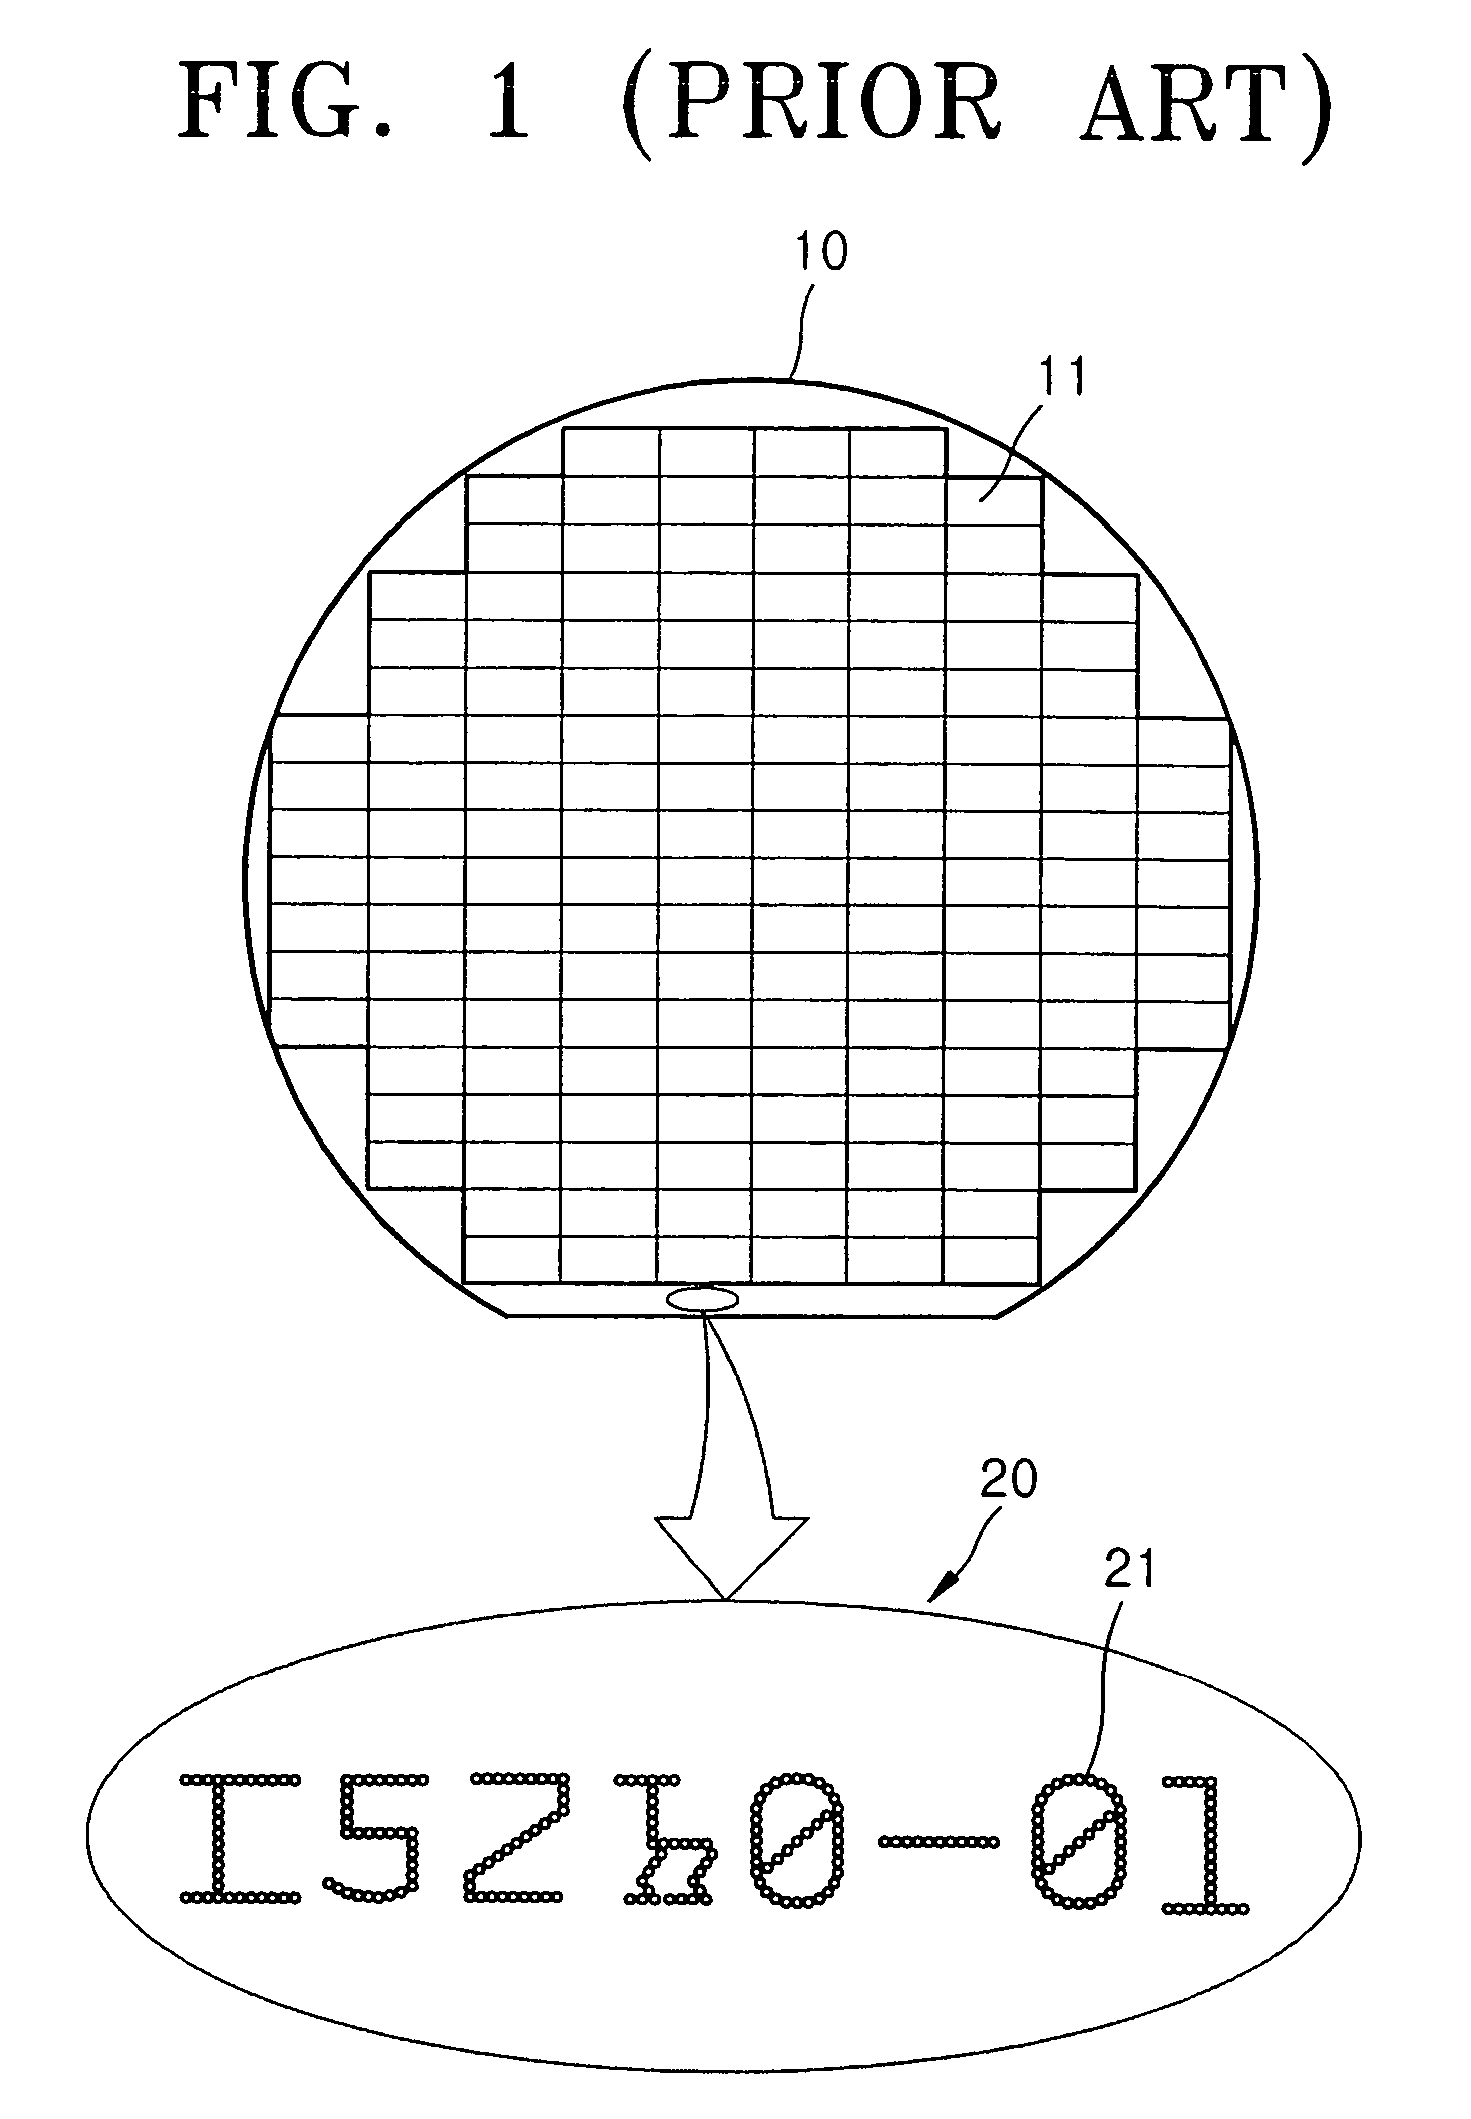 Semiconductor wafer marking apparatus having marking interlock system and semiconductor wafer marking method using the same